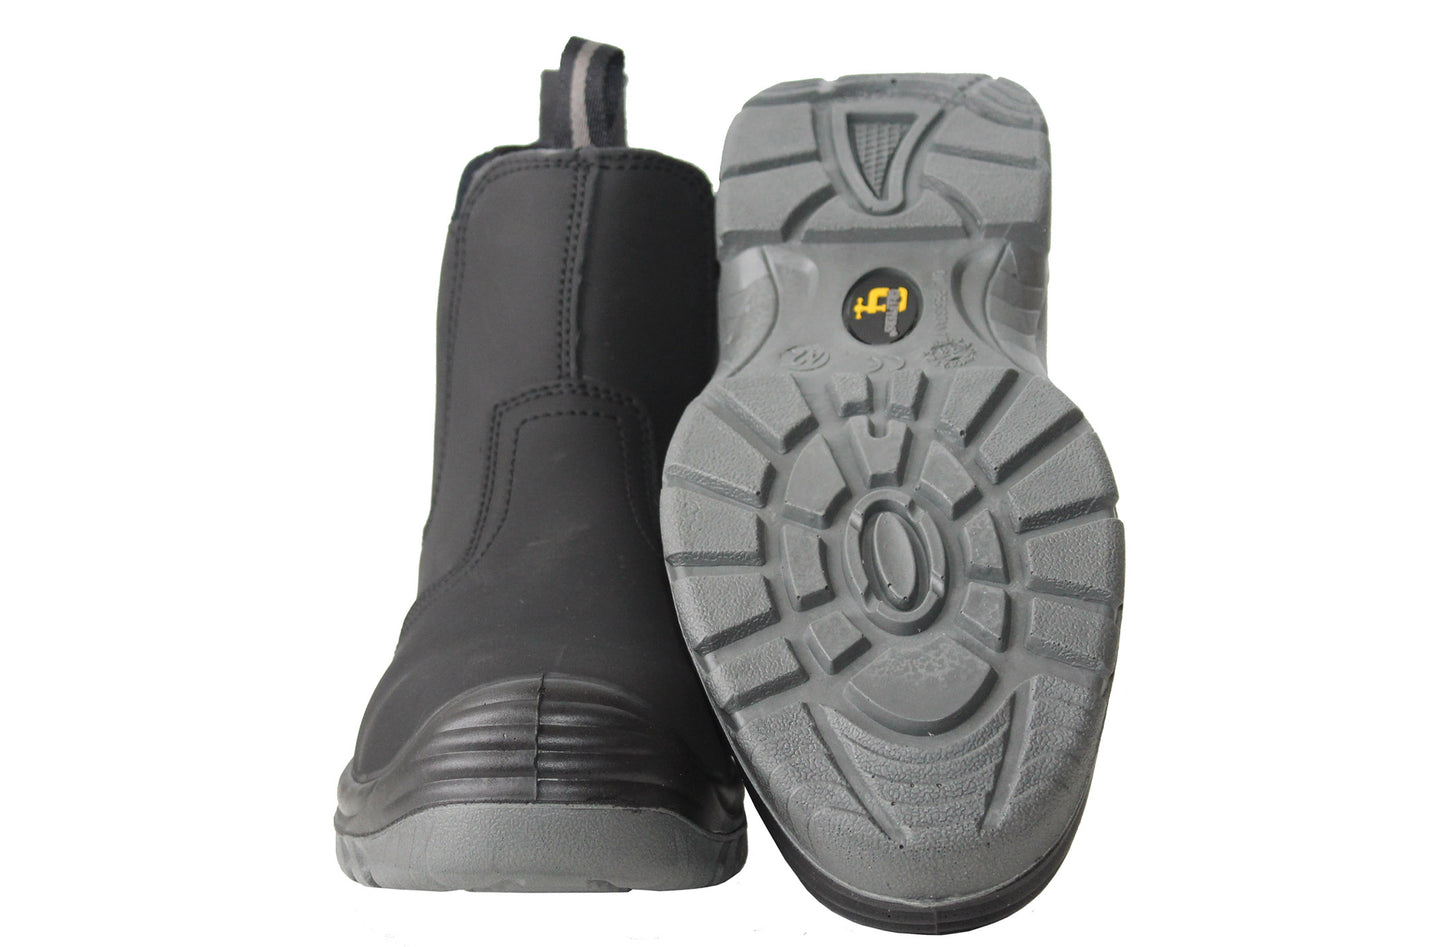 Mens Lightweight Black Leather Safety Steel Toe Slip On Twin Gusset Work Dealer Boots Shoes